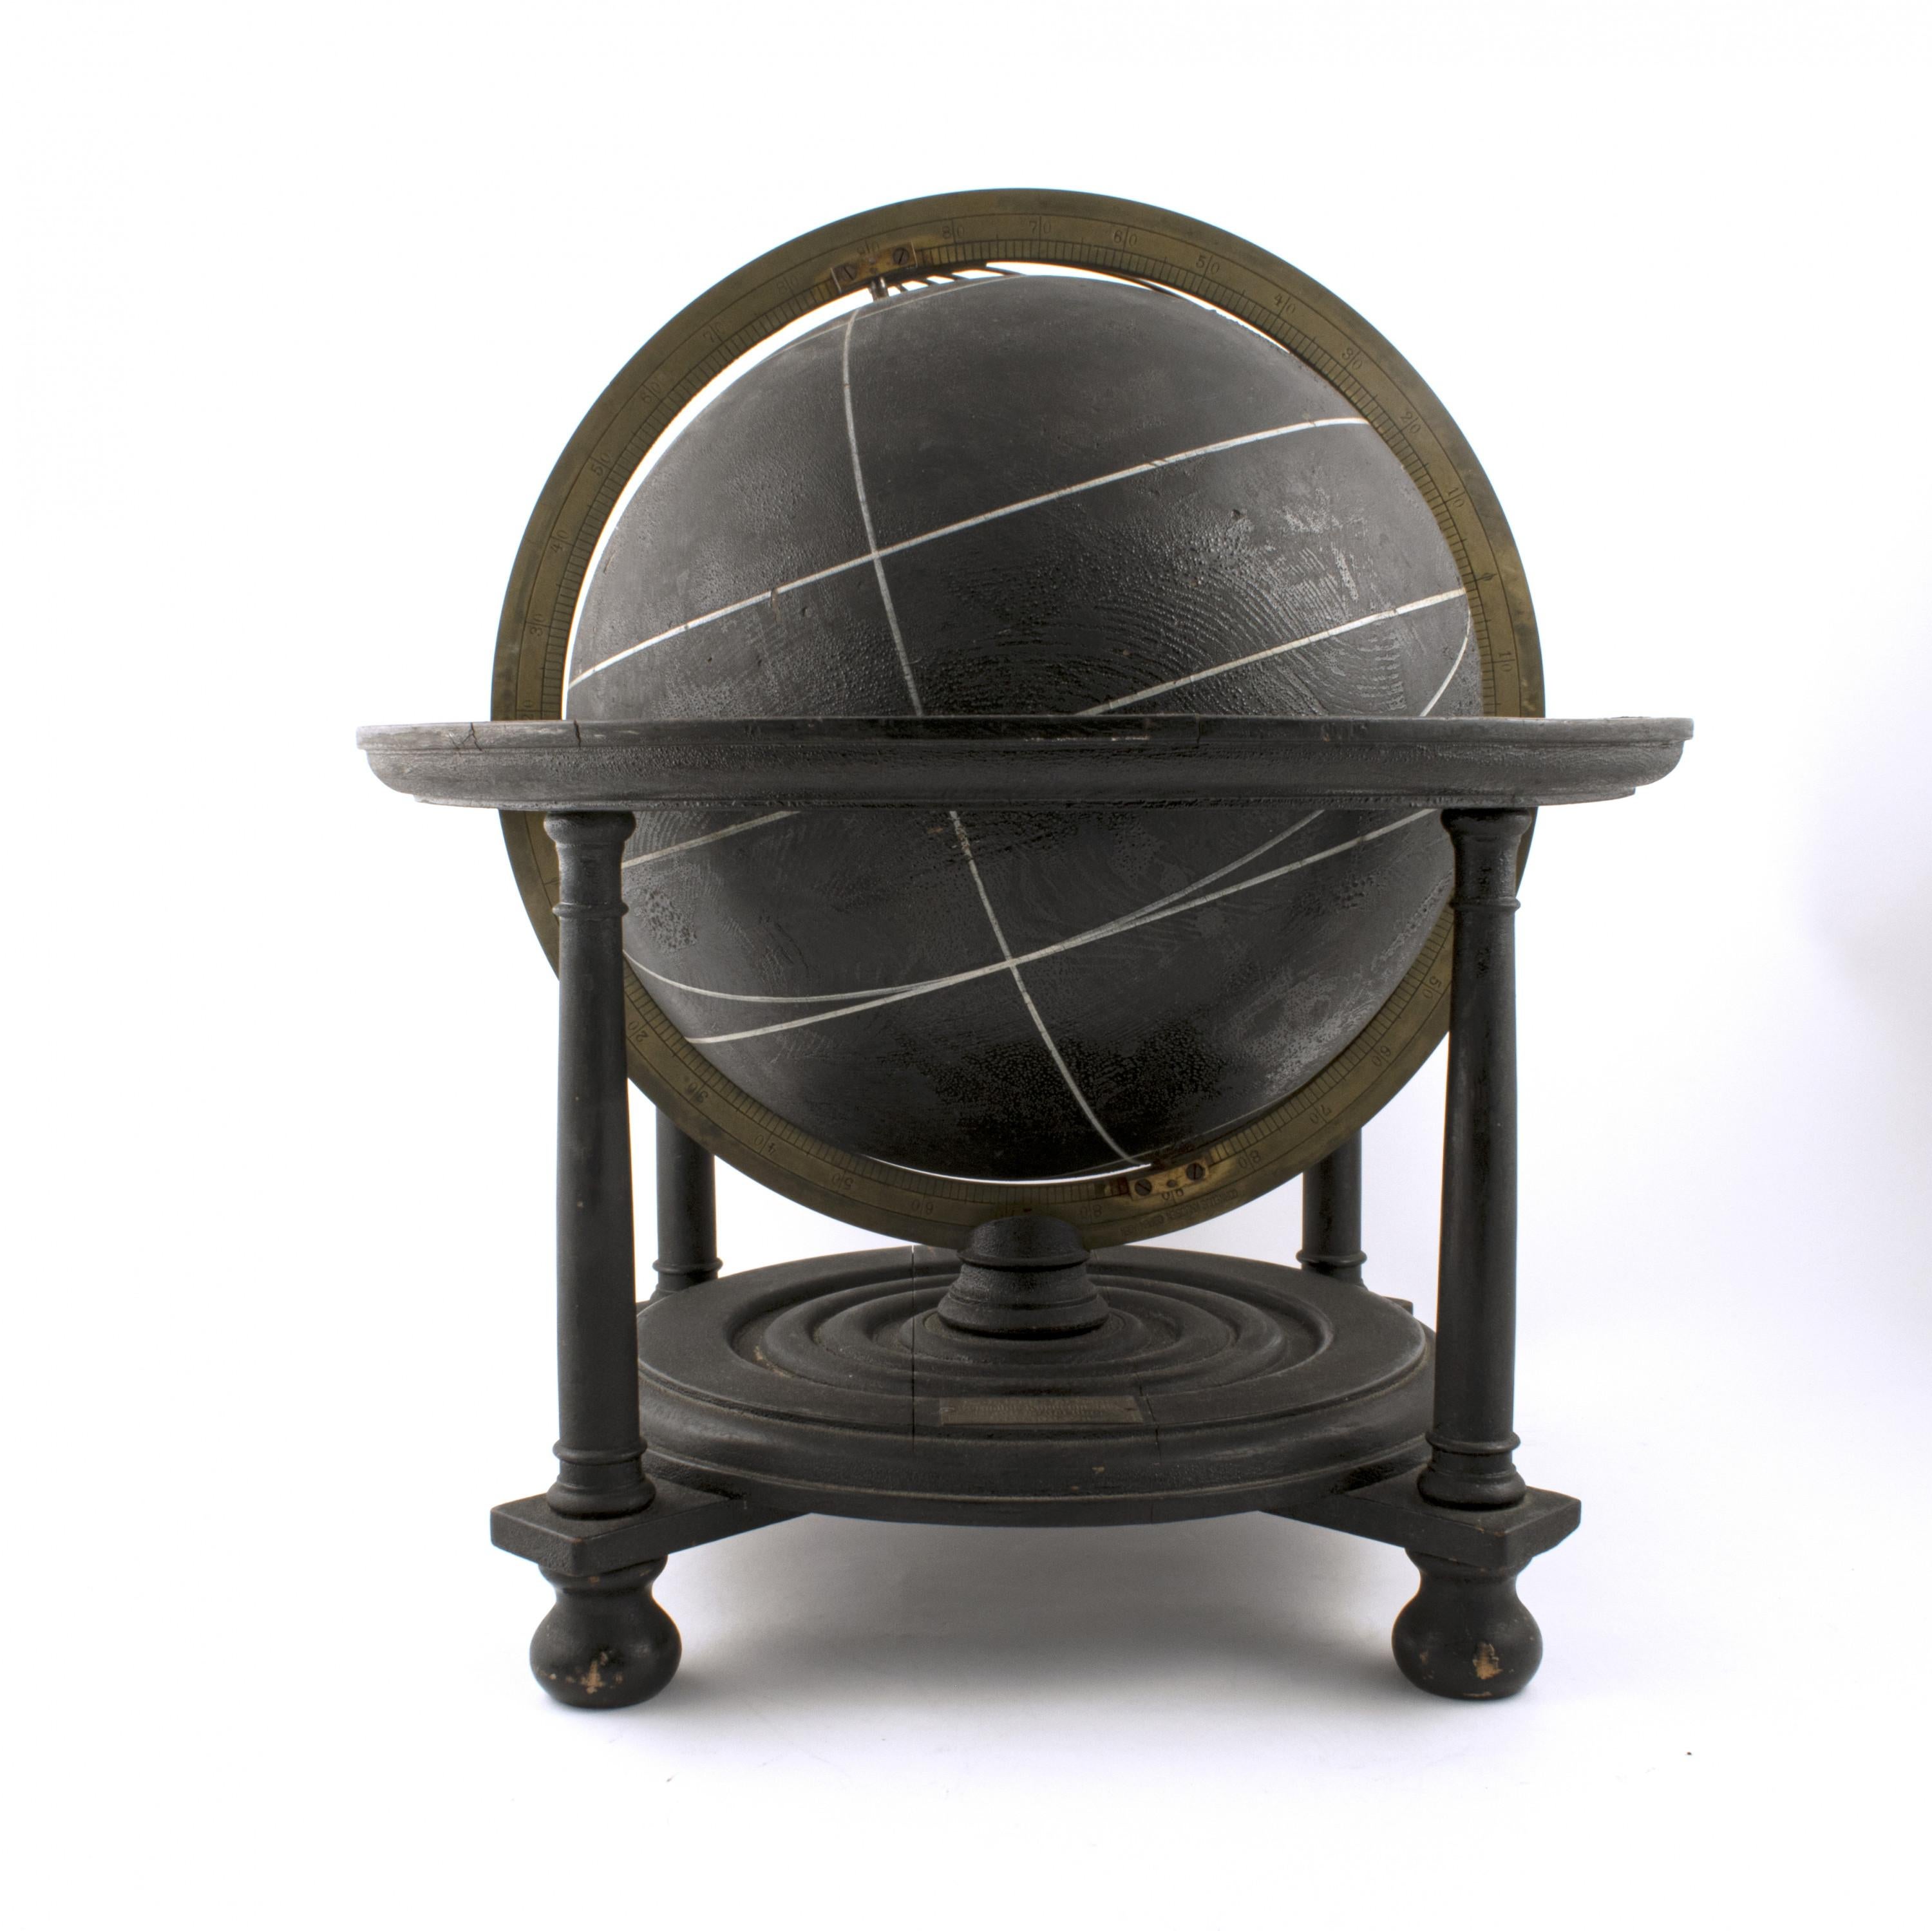 first globe made